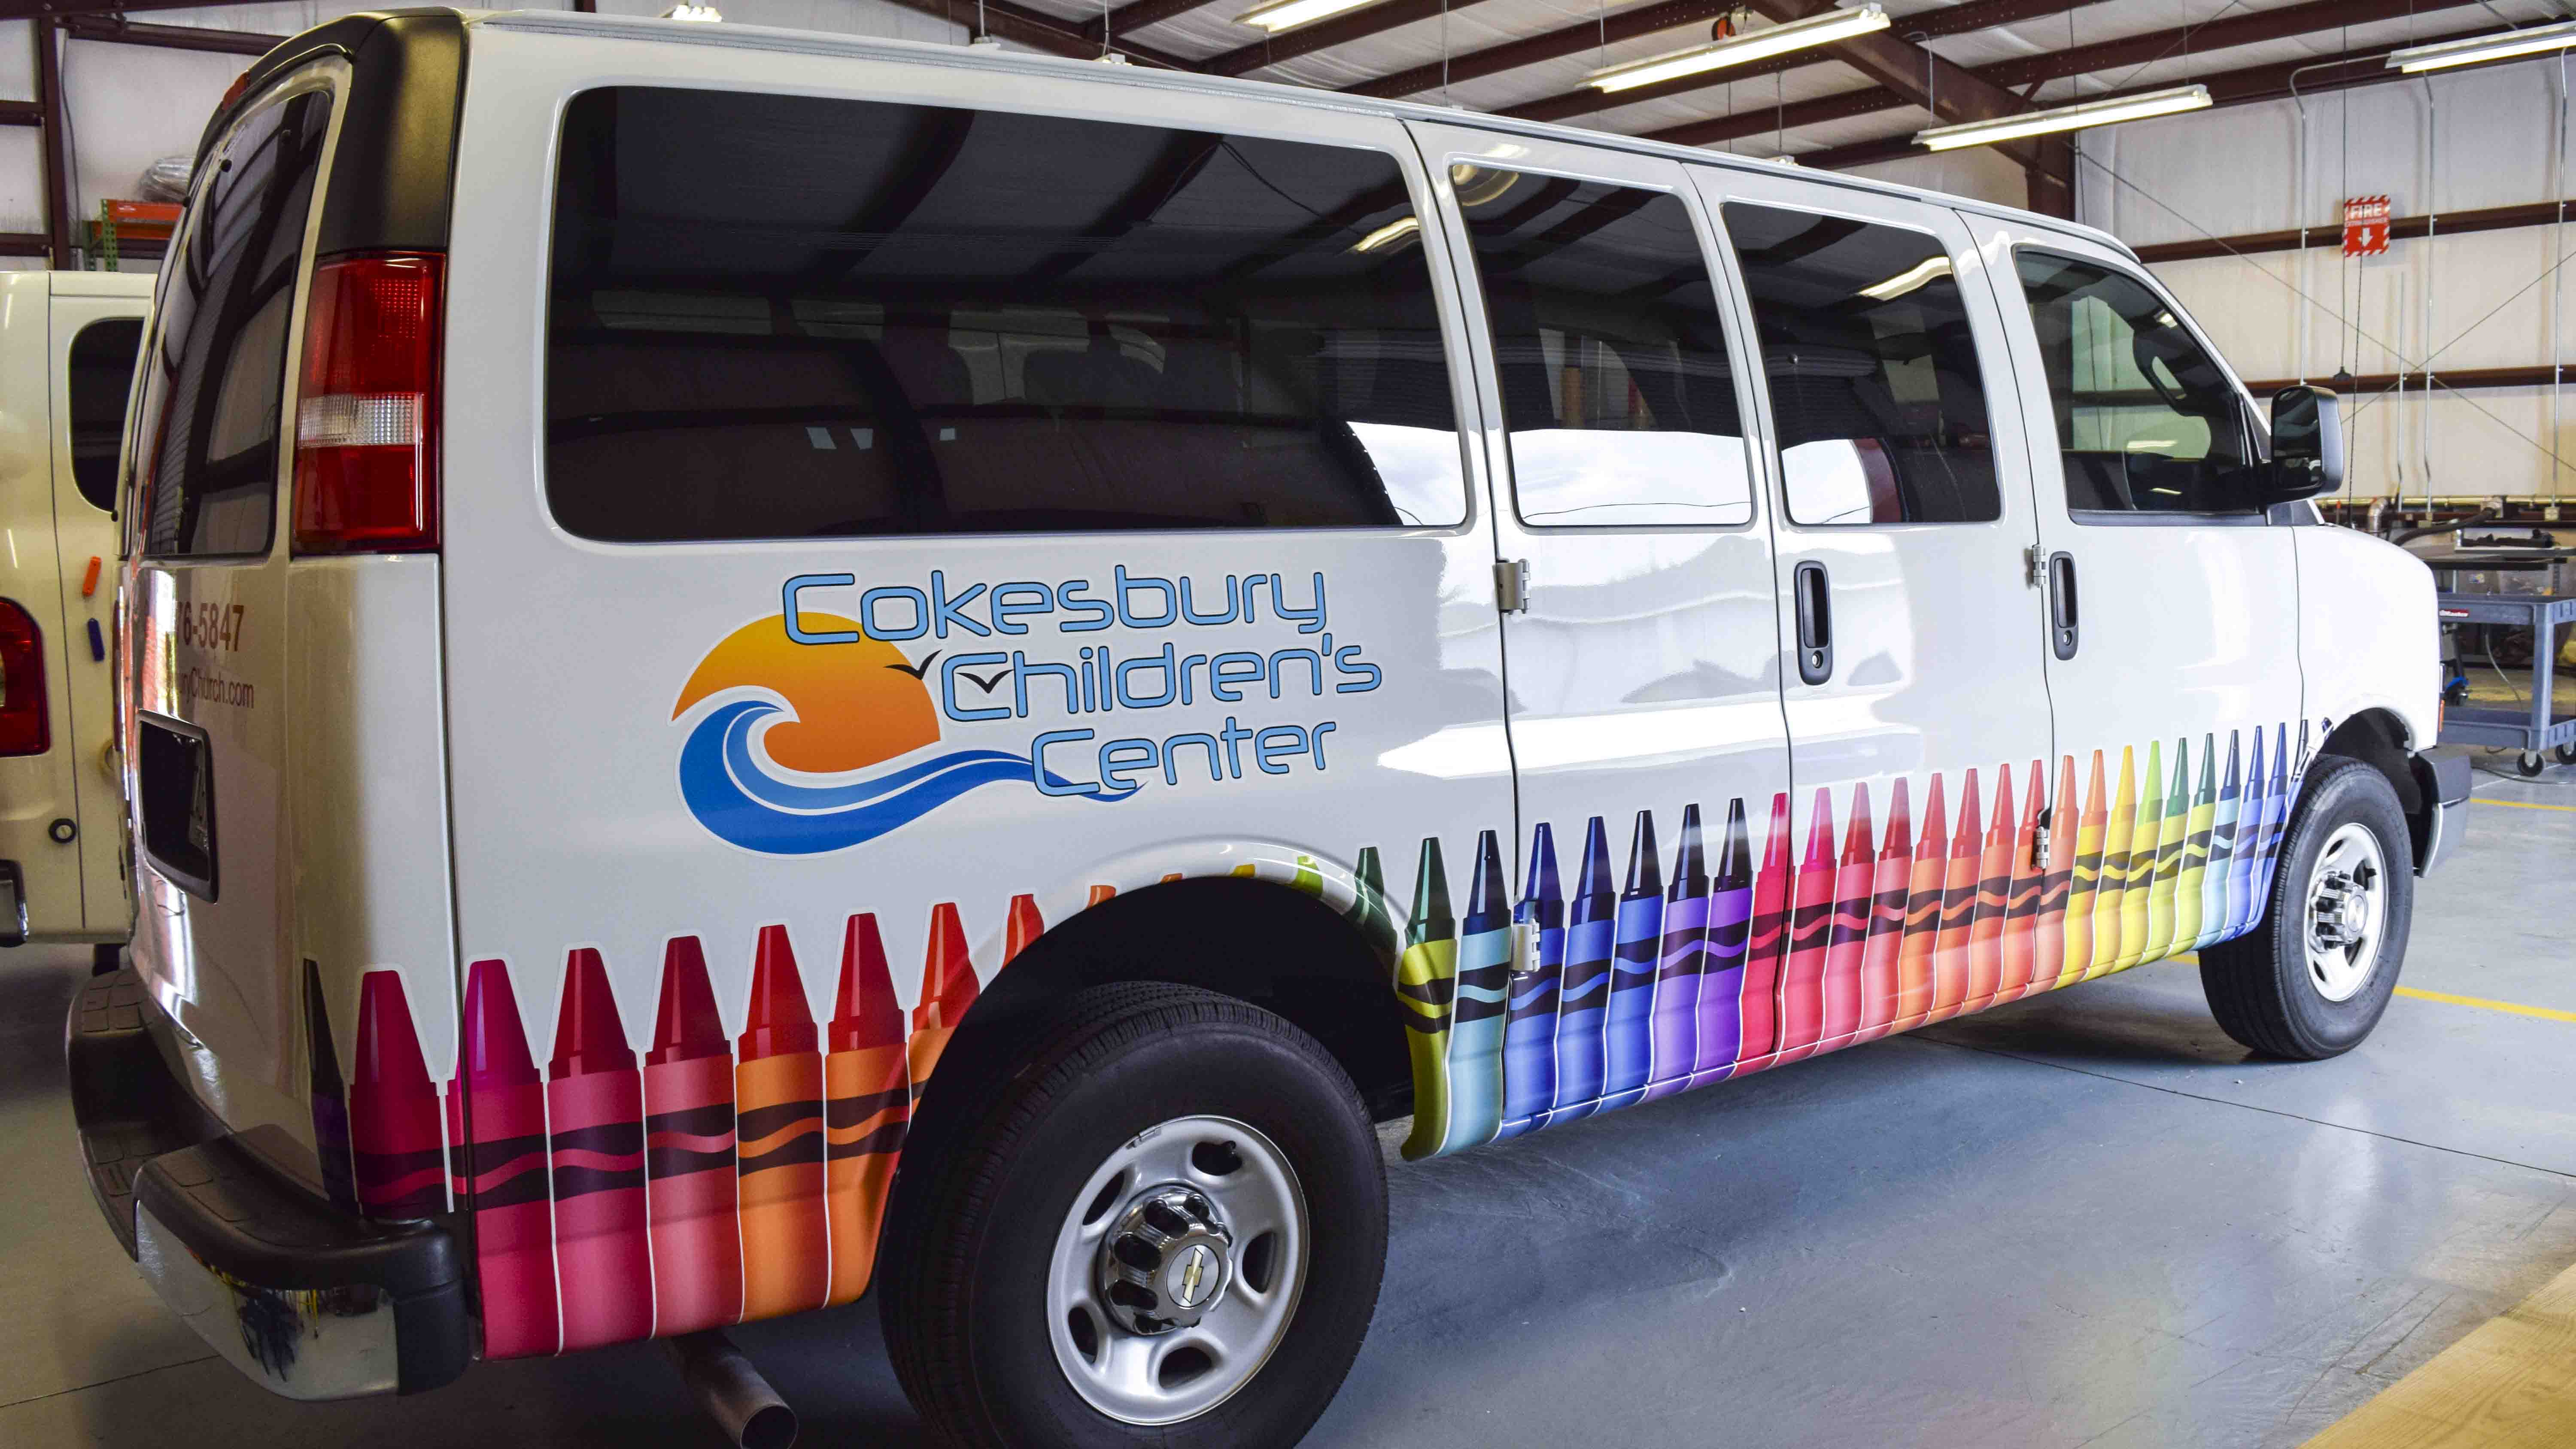 Pensacola Sign Vehicle Graphics - Graphics for Cokesbury Children's Center Van